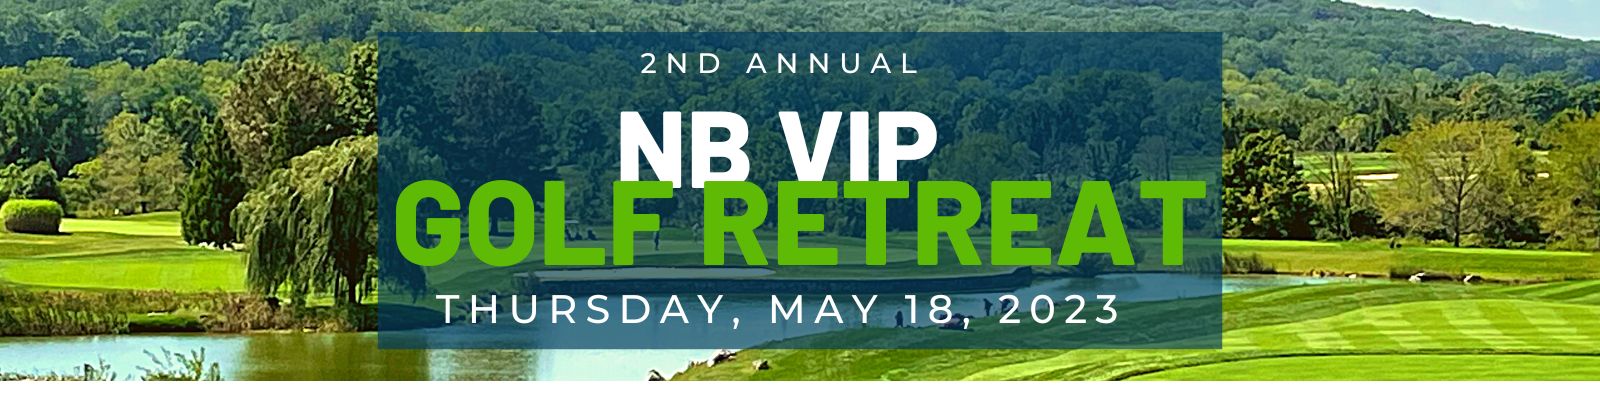 05.18.23 2nd Annual NB VIP Golf Retreat